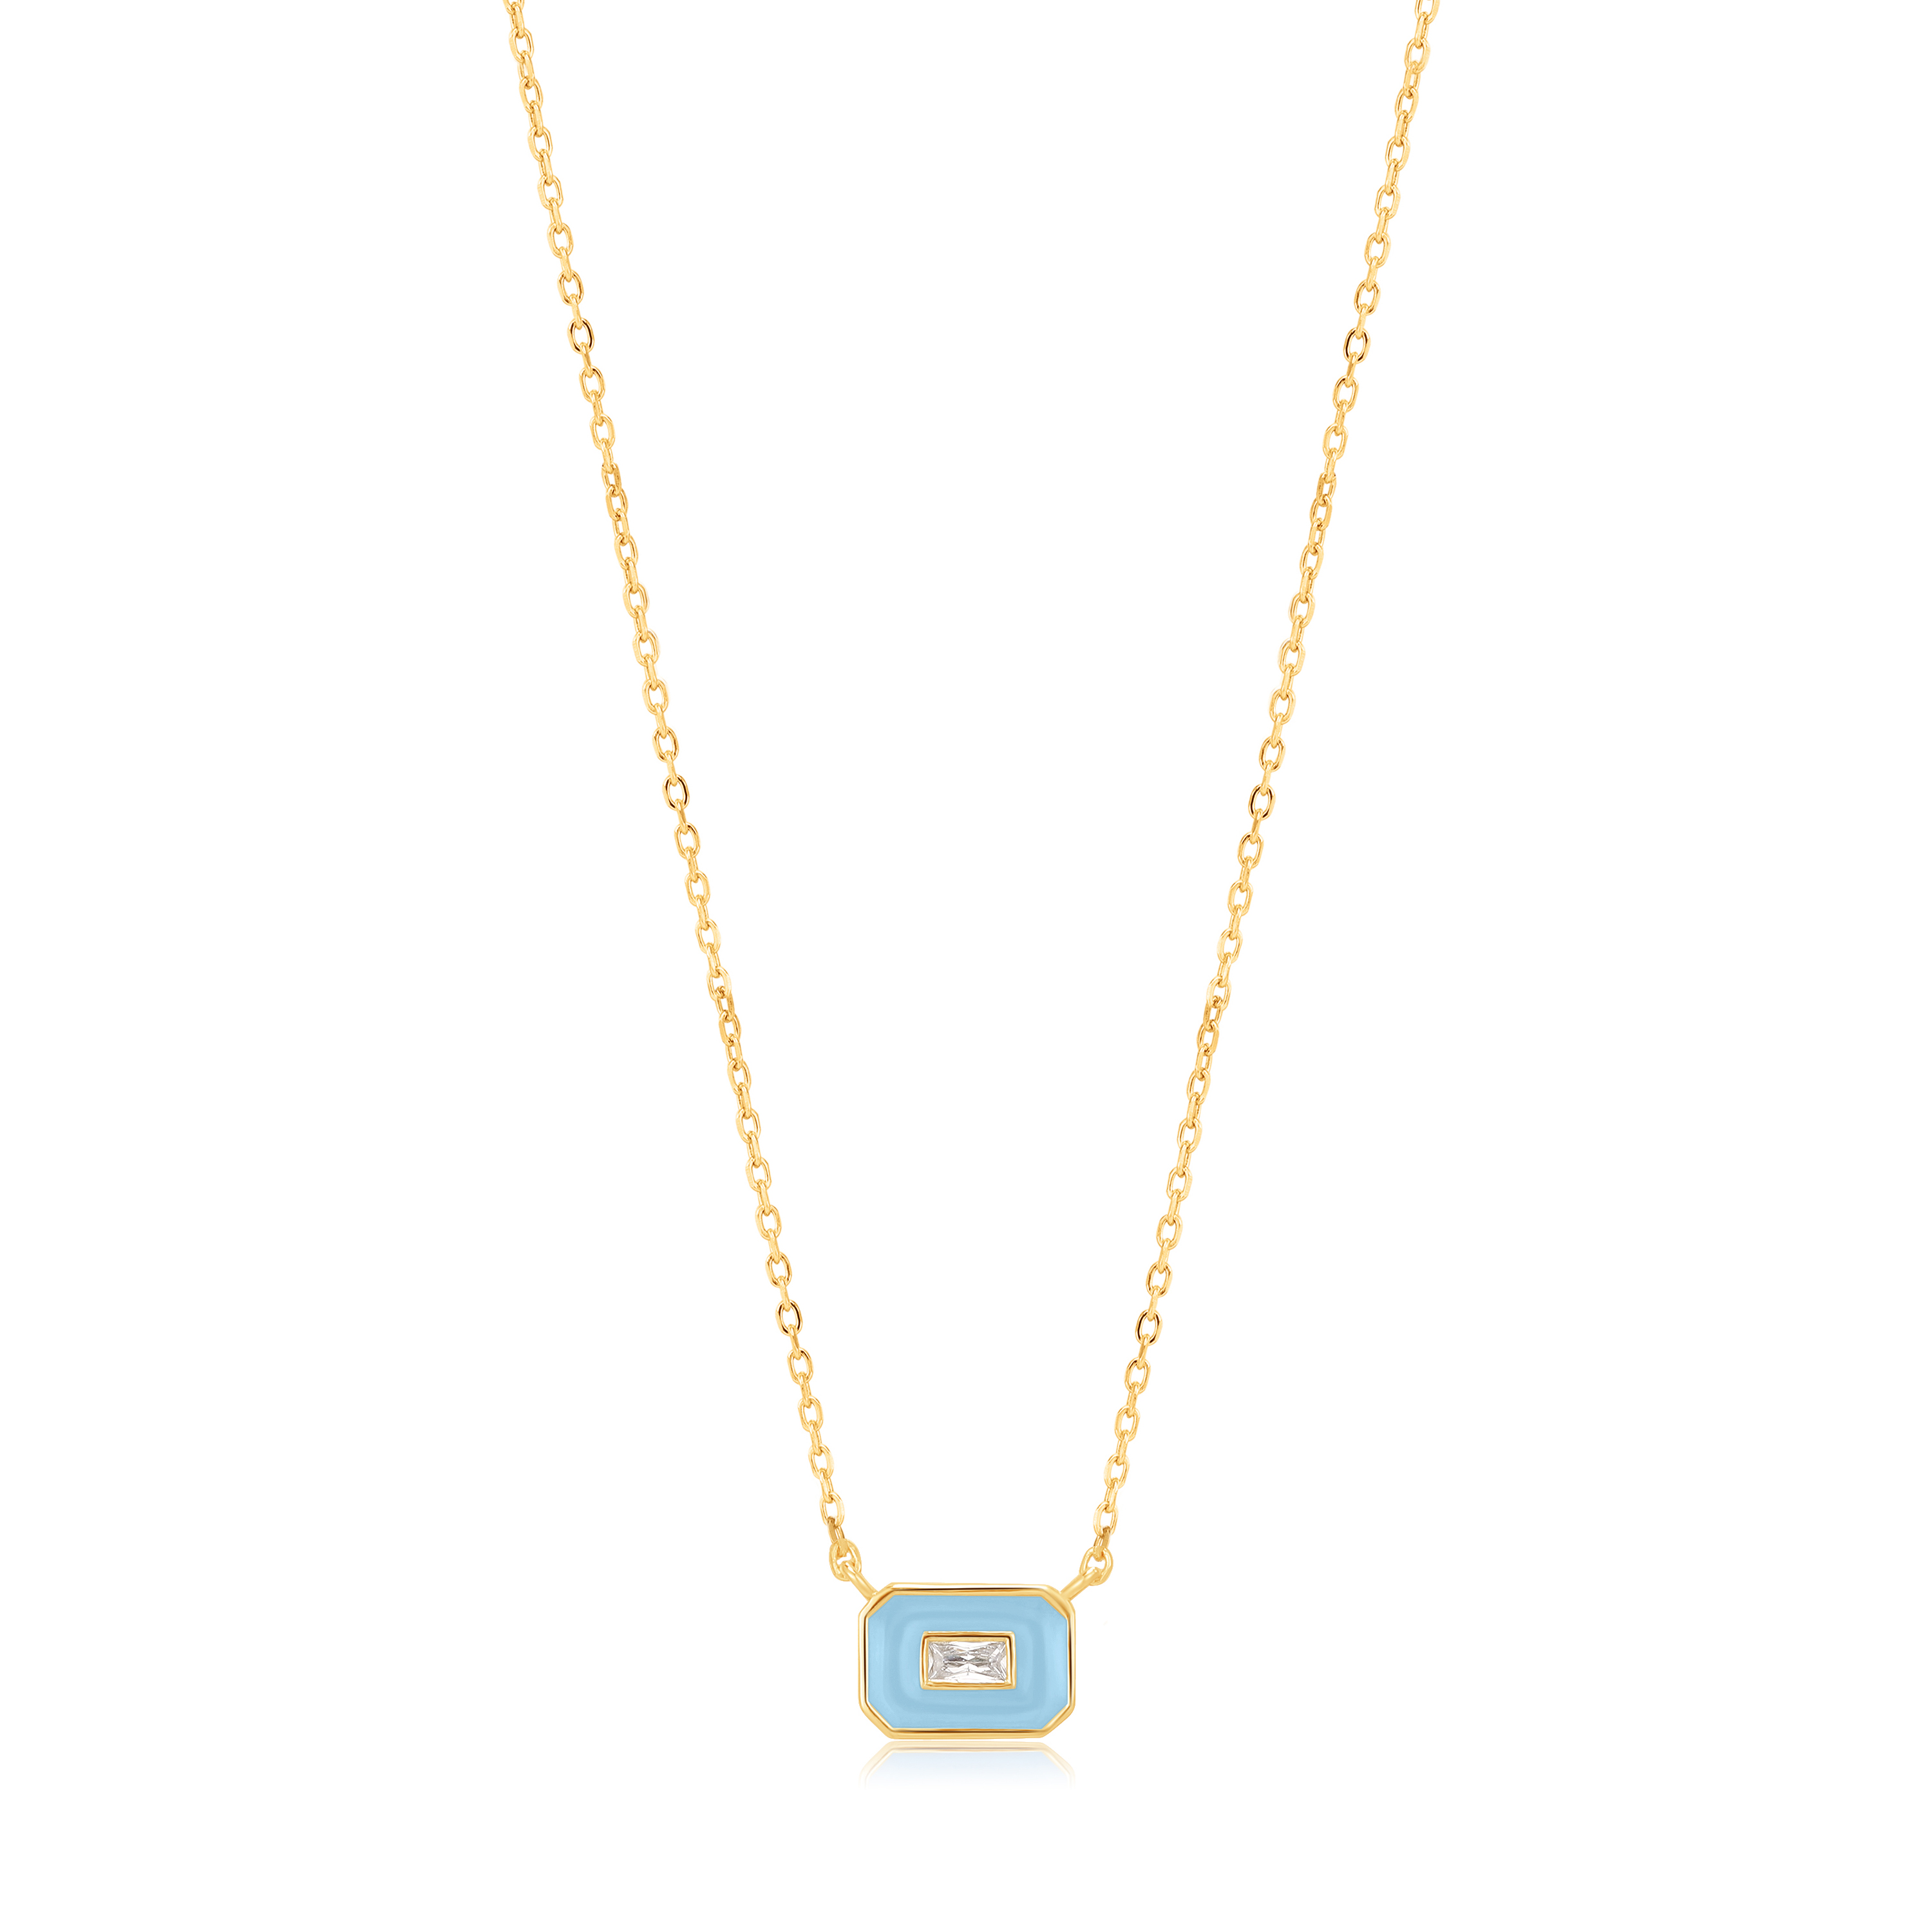 ANIA HAIE Powder Blue Enamel Emblem Necklace, Gold-plated